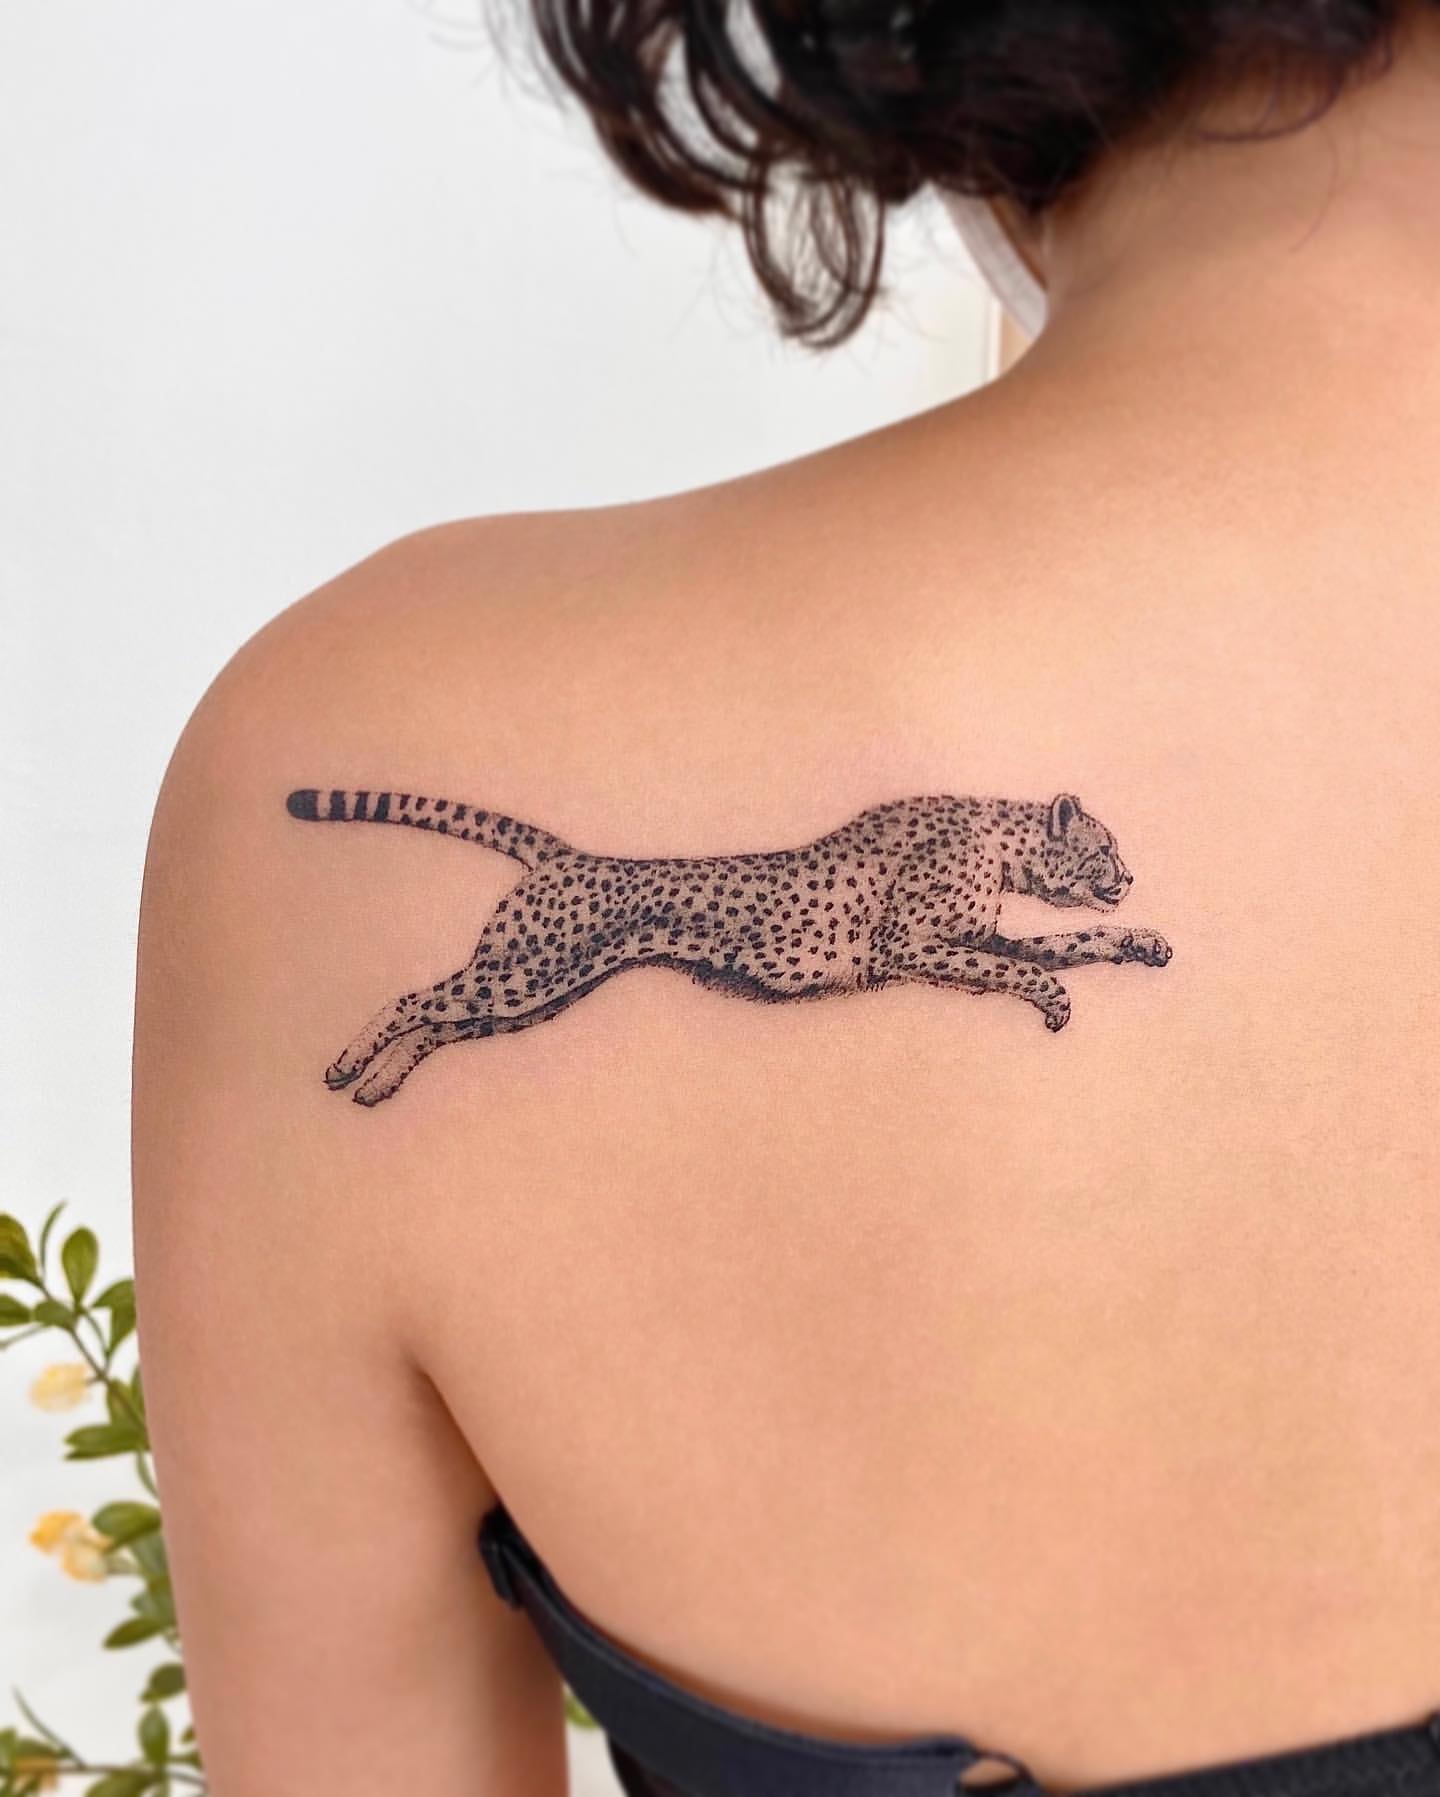 Cheetah Tattoo Ideas 29